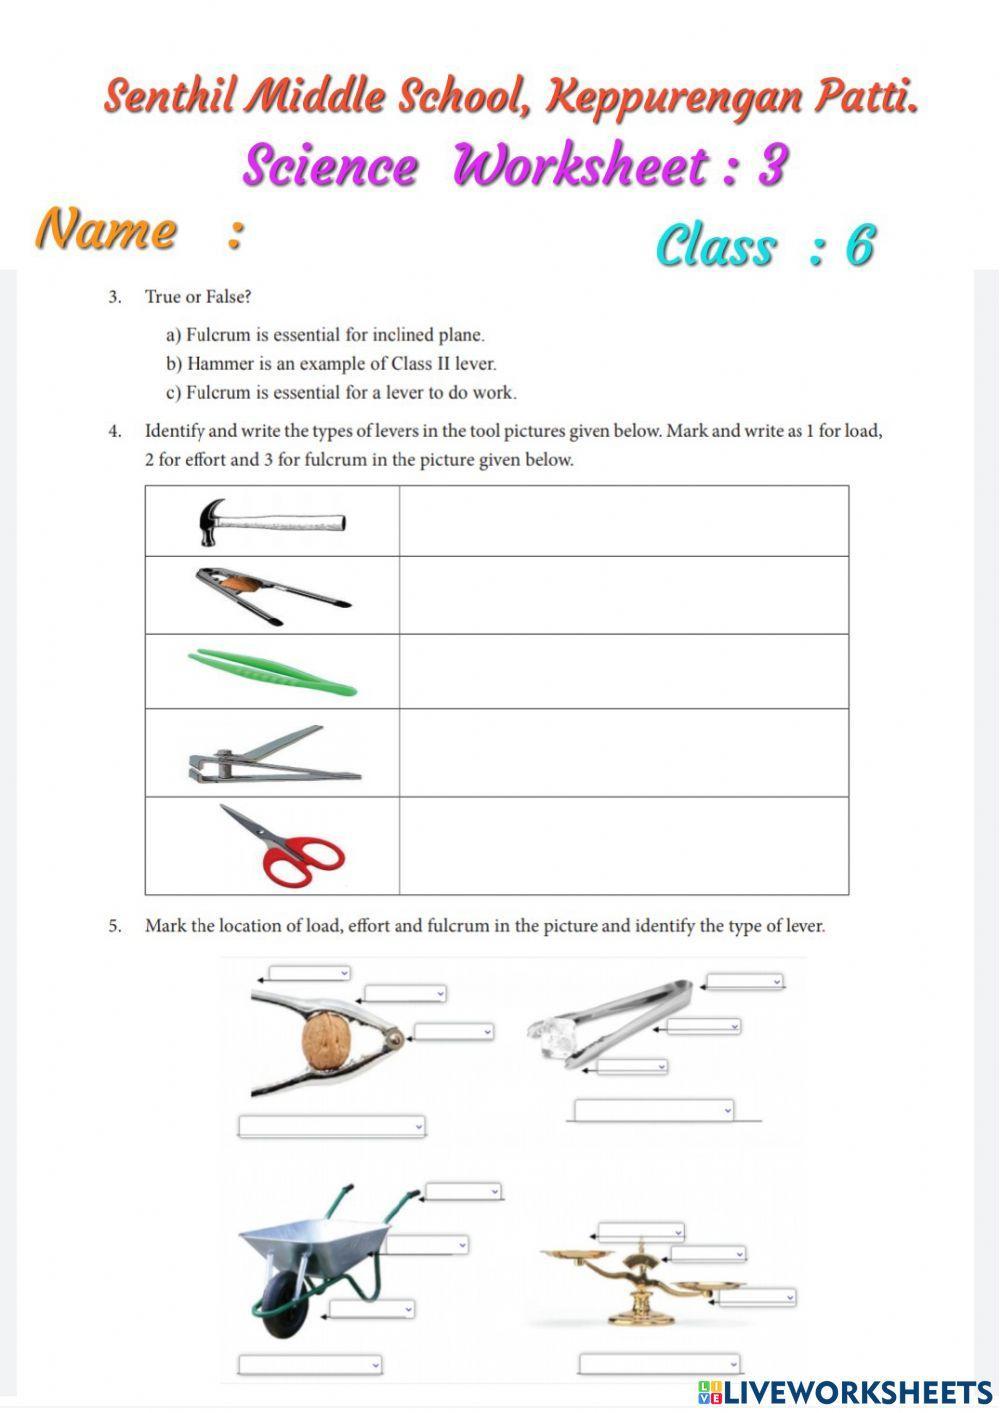 Senthil middle school, keppurengan patty, class:6 science- lever- prepared by R.Kumanan, Sec.Gr.Tr..